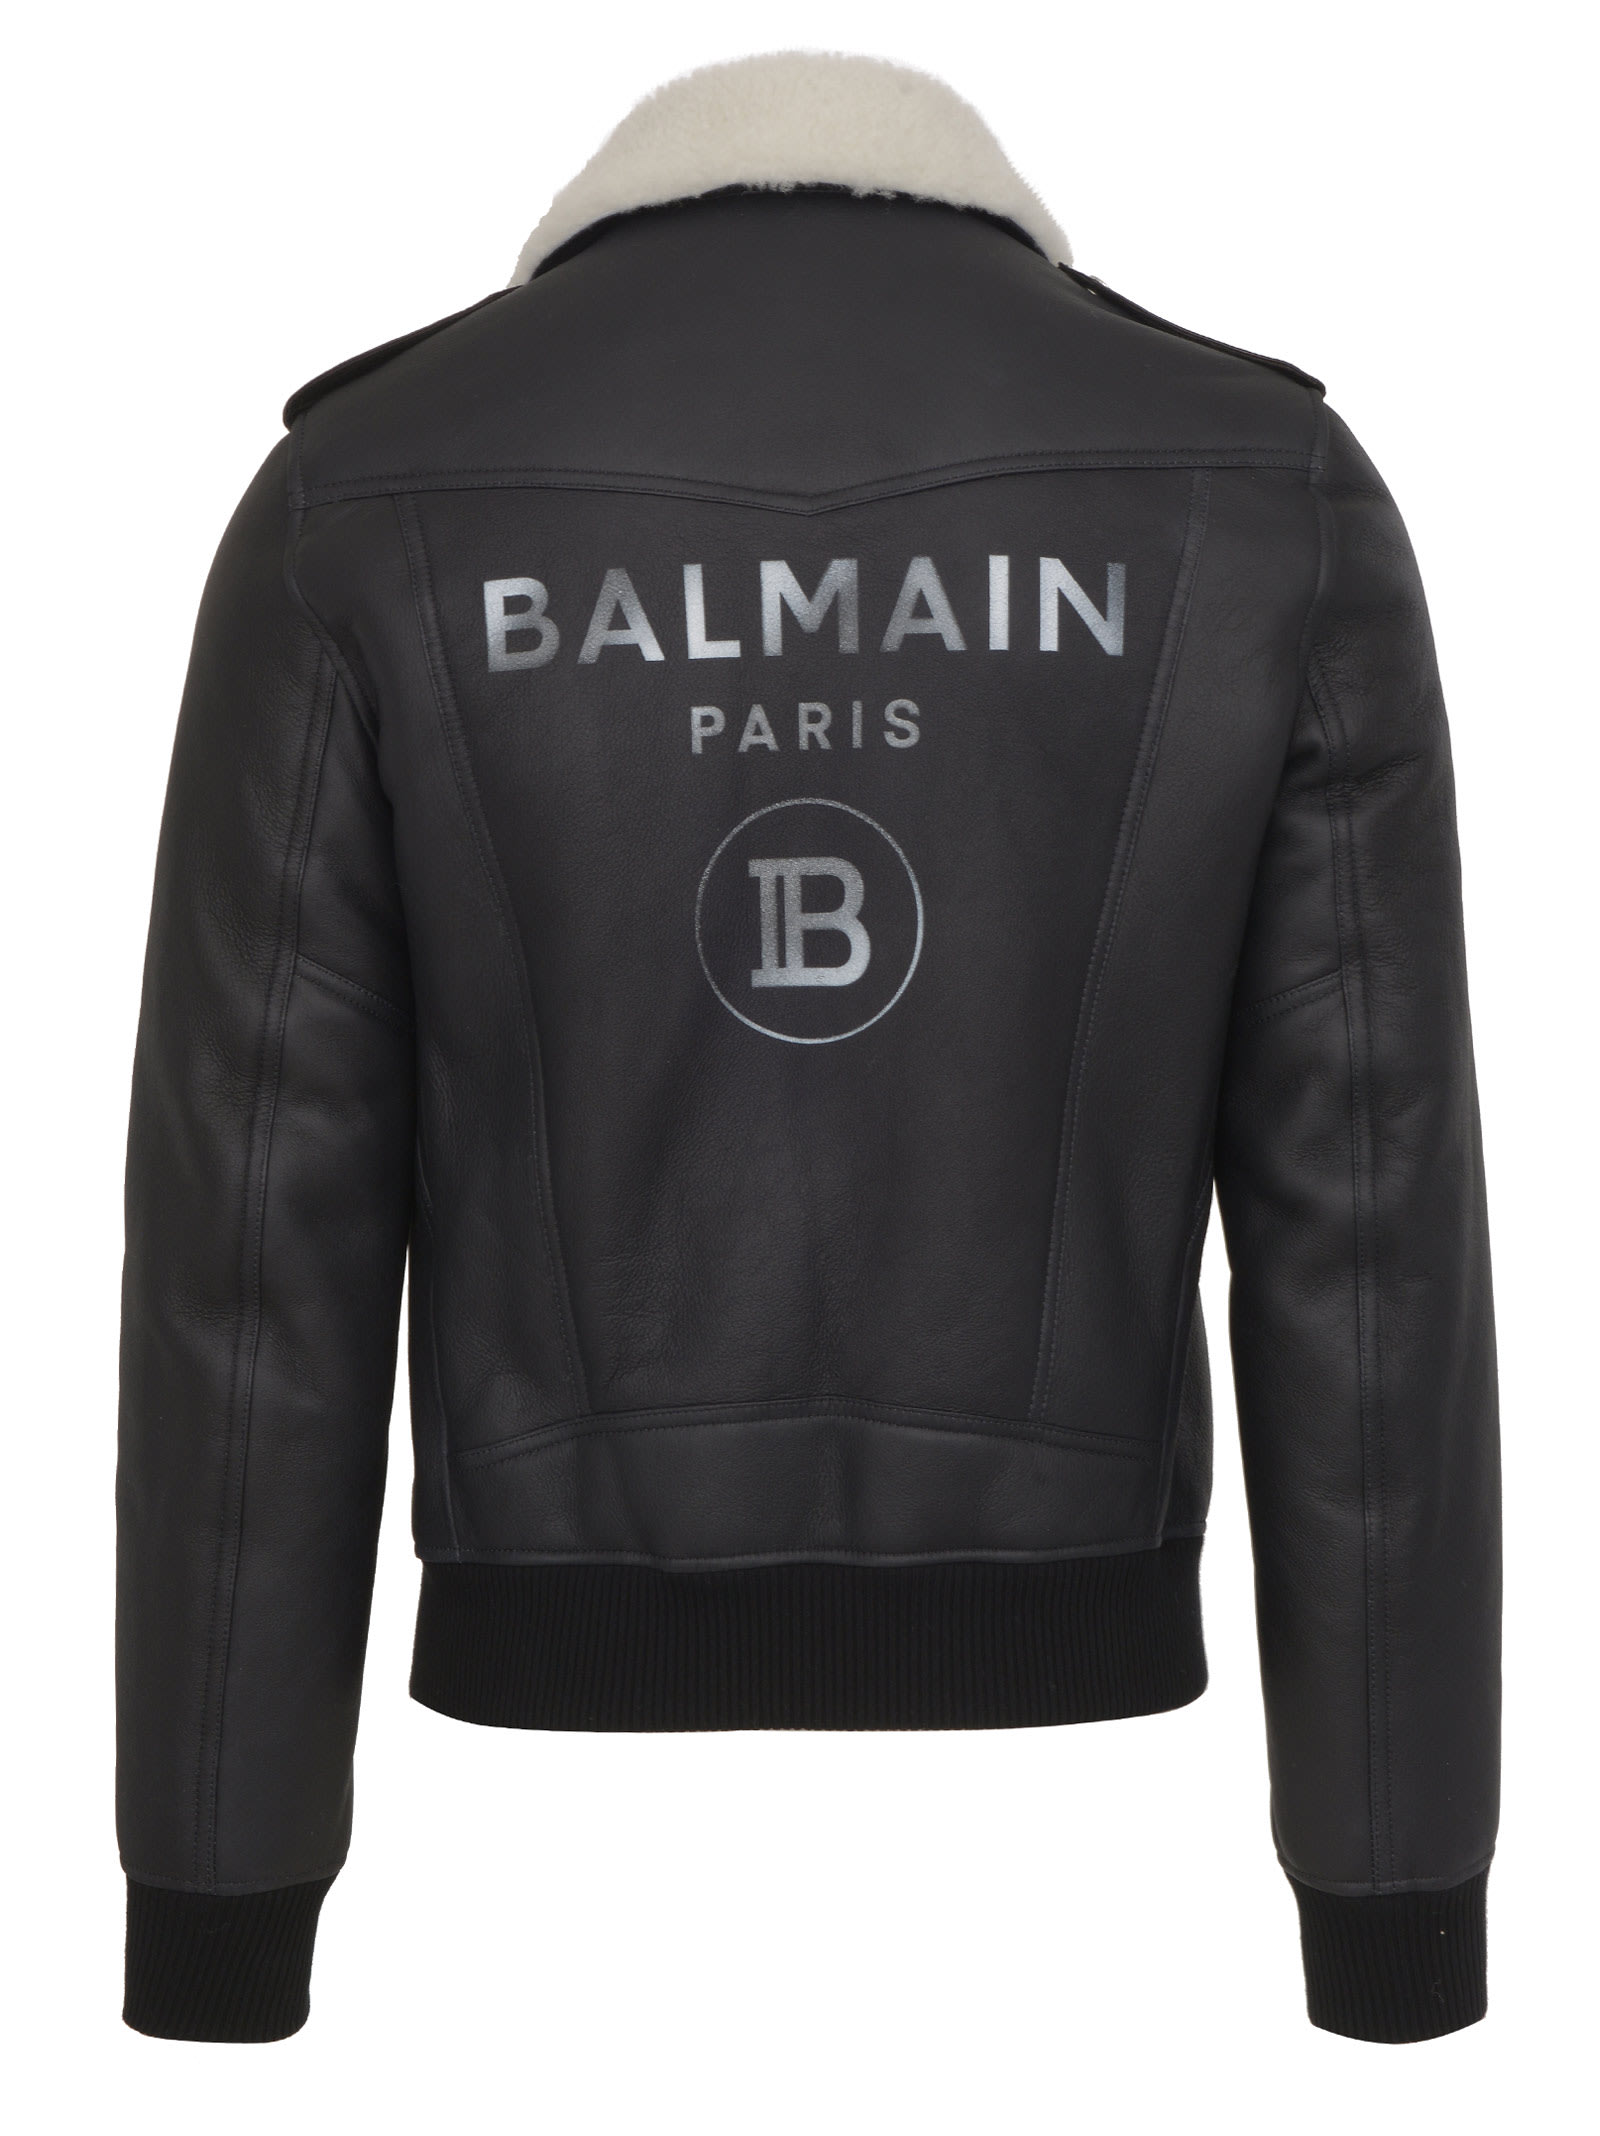 Balmain Paris Jacket In Black